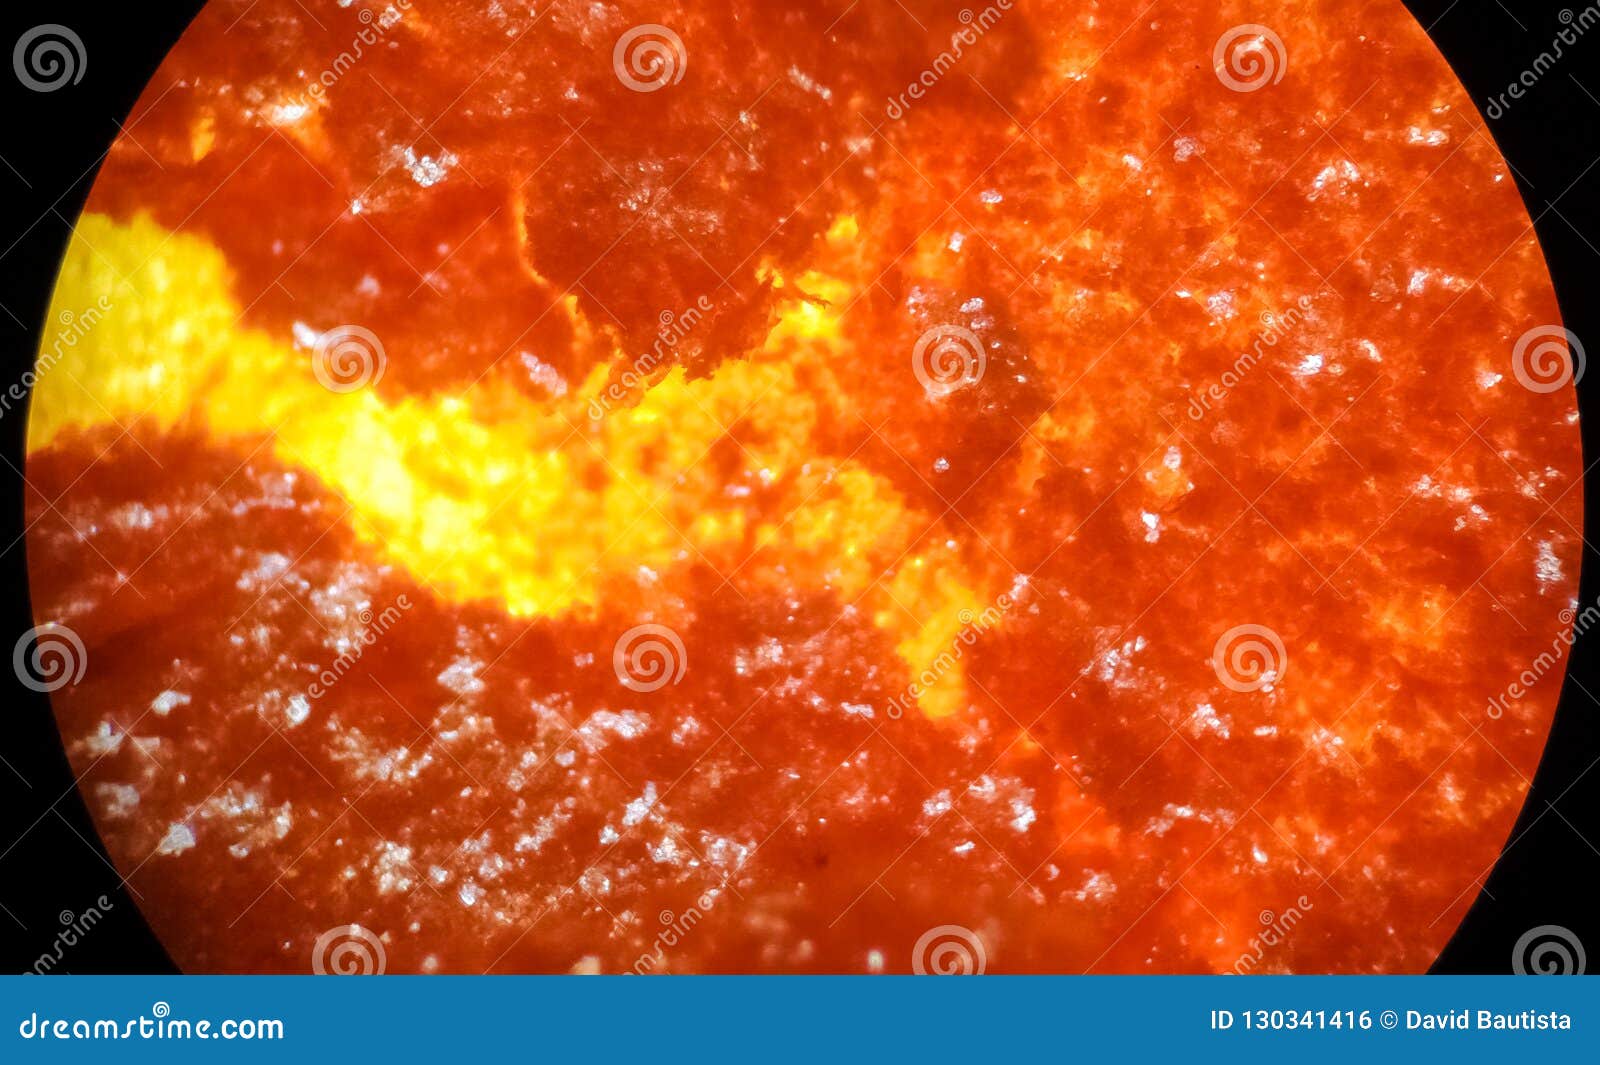 orange chemical substance, ferrocene, under a microscope